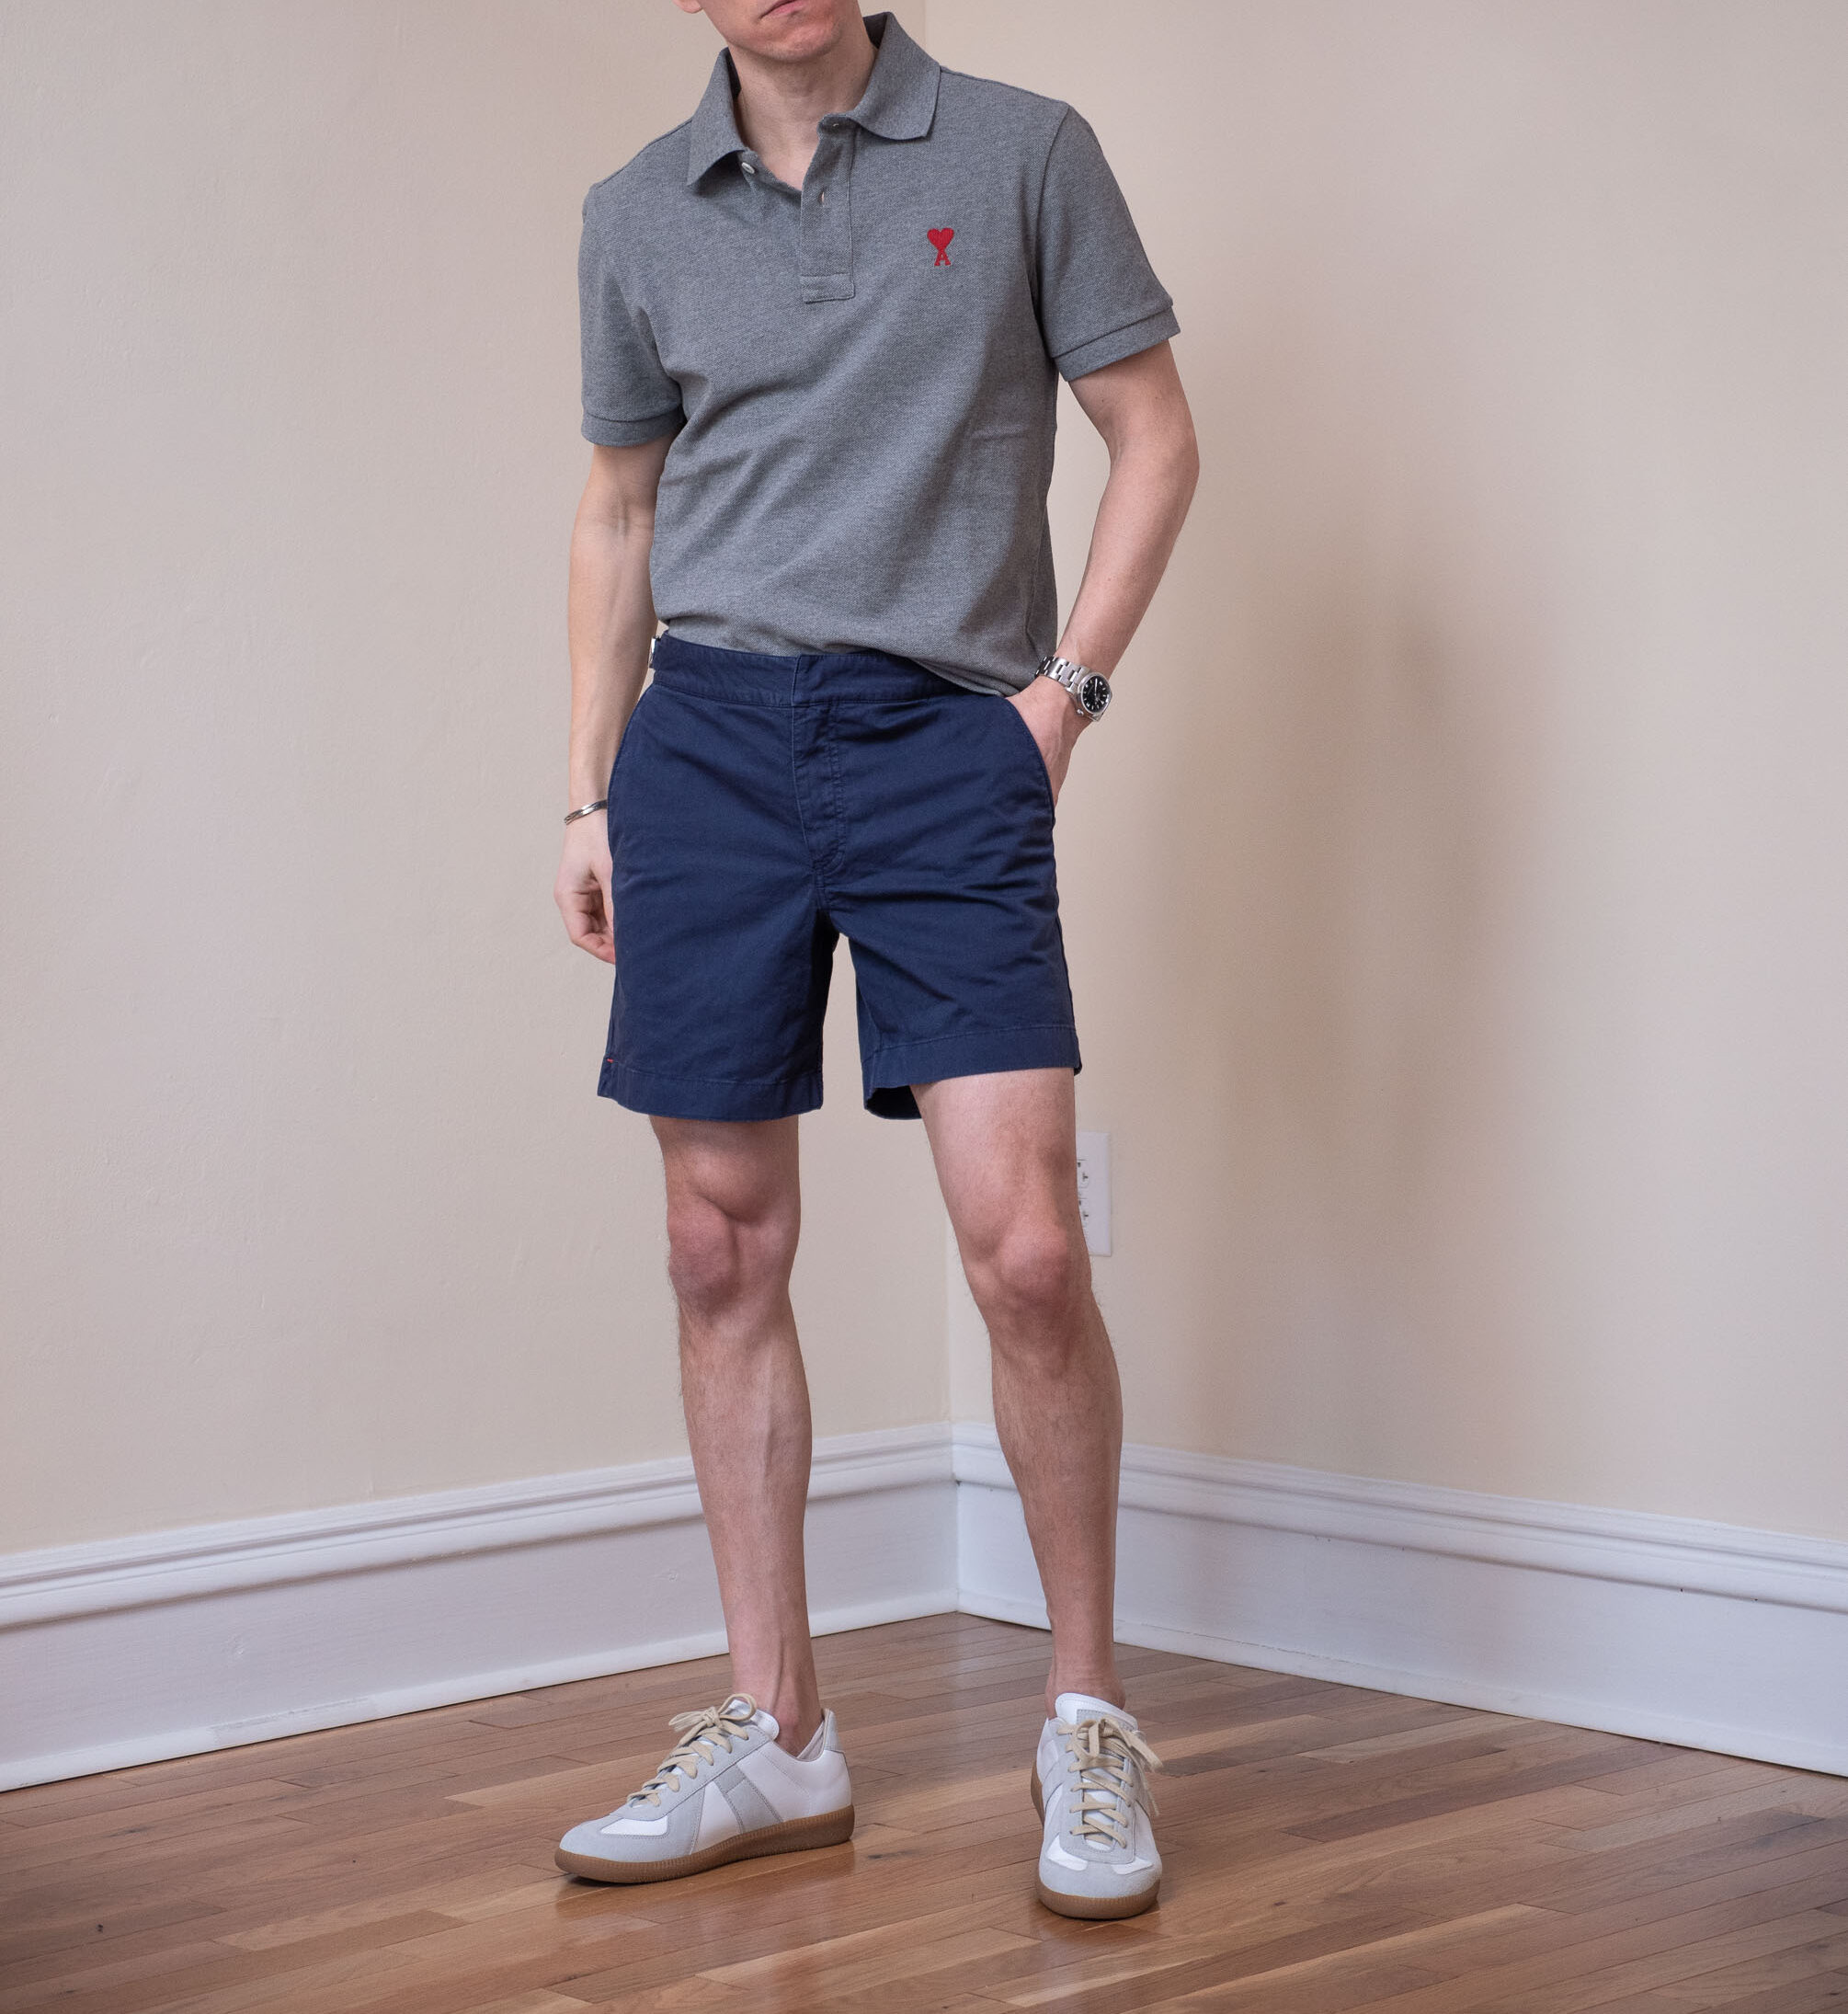 GATs chino shorts polo shirt 6